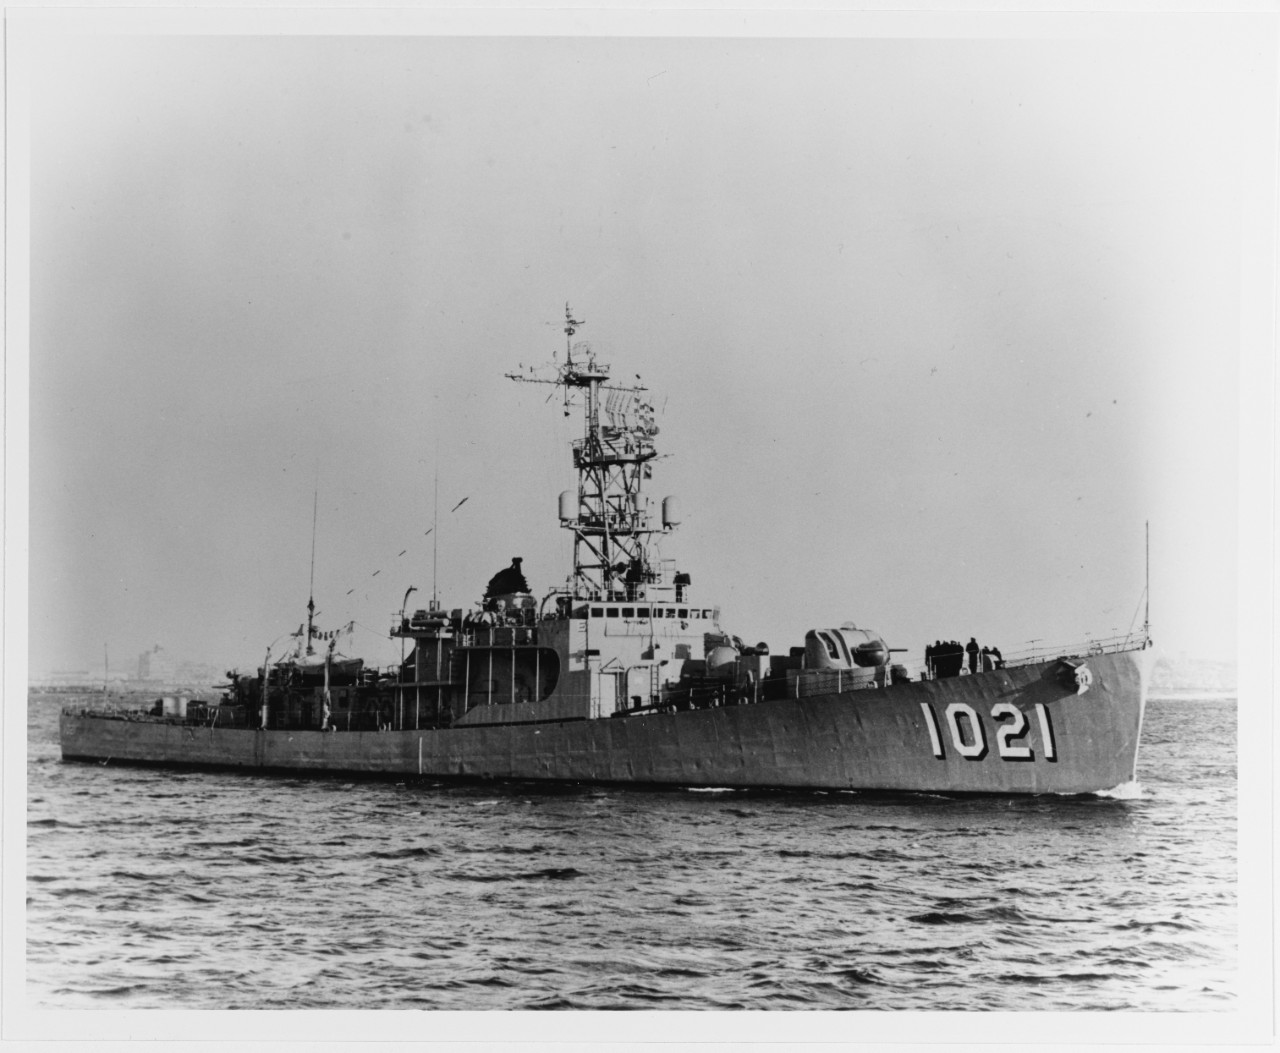 USS COURTNEY (DE-1021)